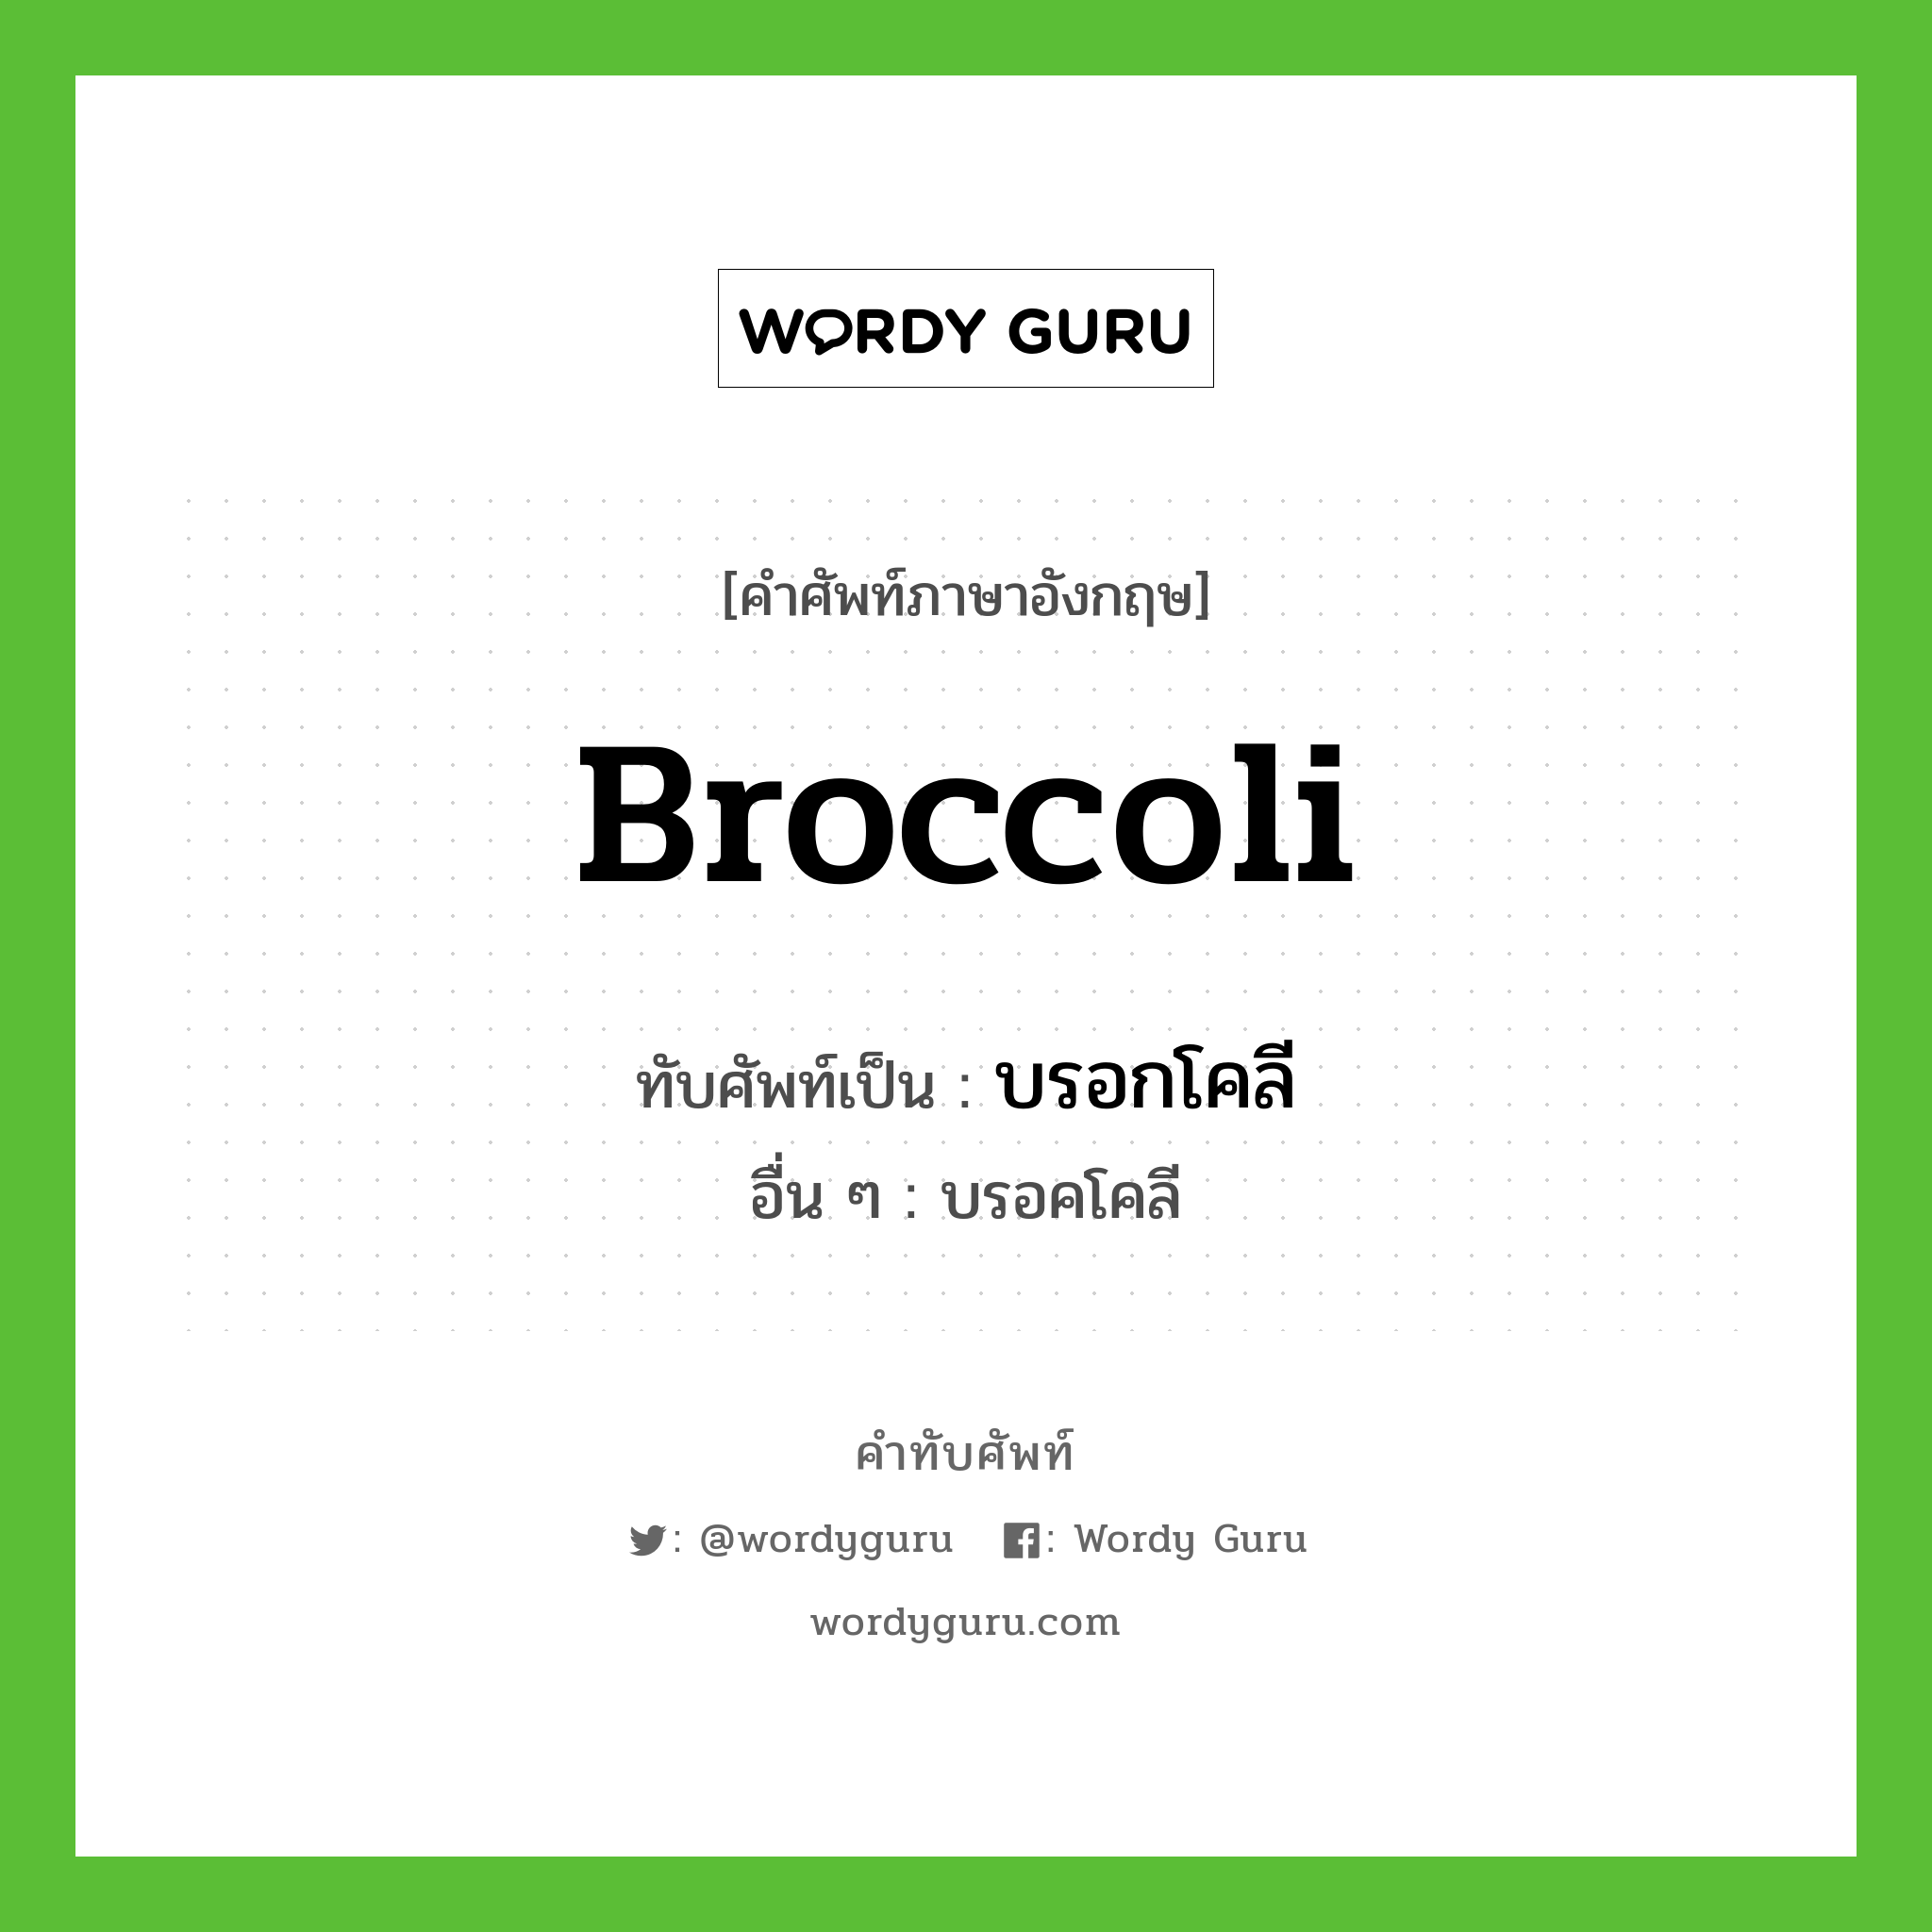 broccoli เขียนเป็นคำไทยว่าอะไร?, คำศัพท์ภาษาอังกฤษ broccoli ทับศัพท์เป็น บรอกโคลี อื่น ๆ บรอคโคลี